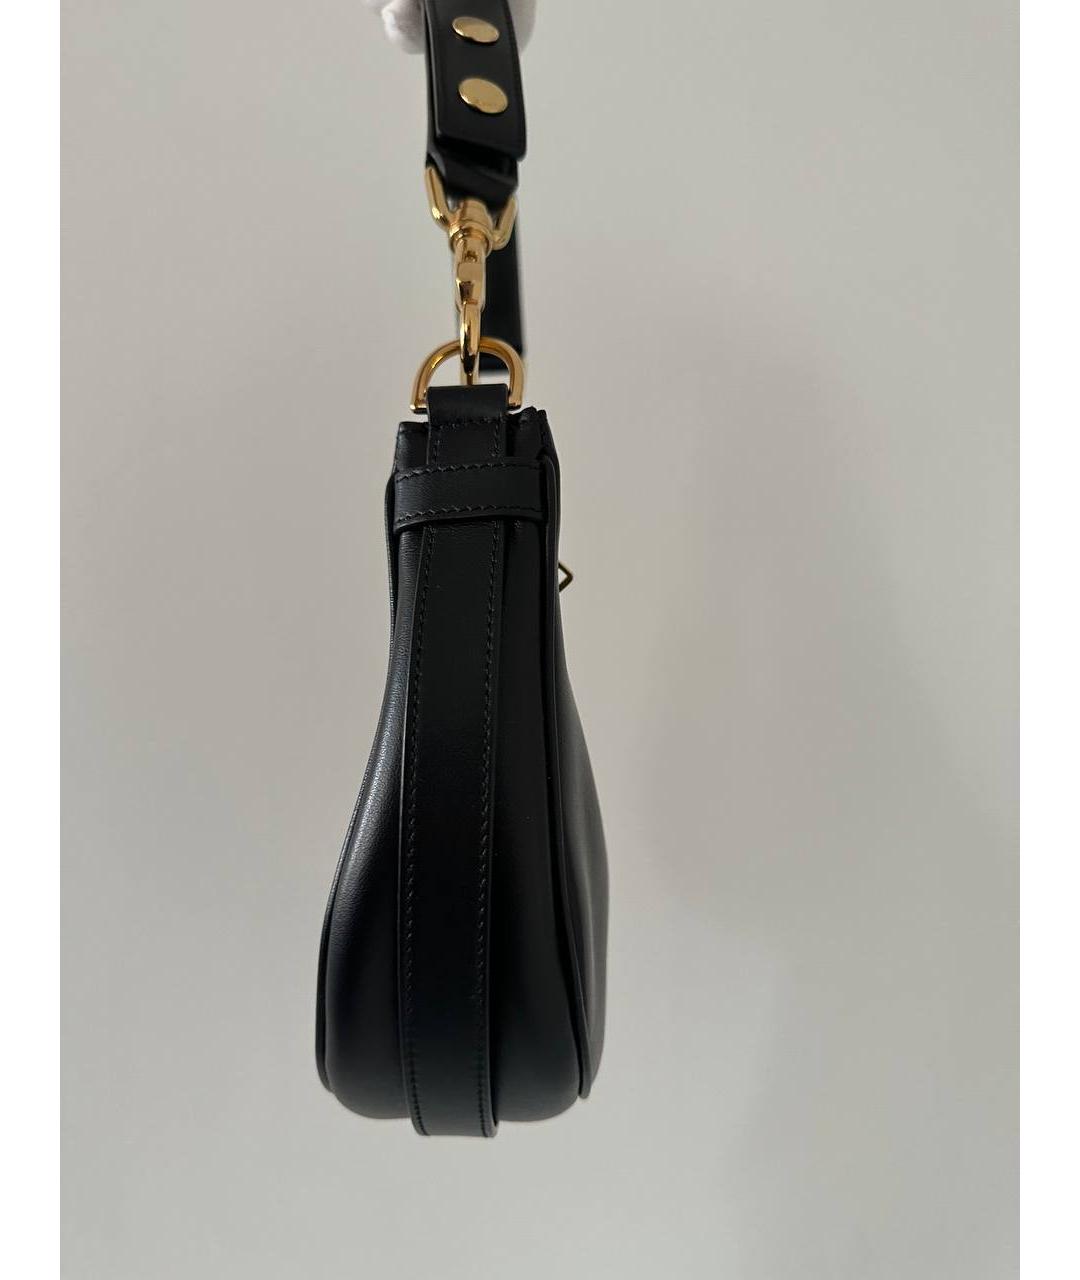 CELINE PRE-OWNED Черная кожаная сумка с короткими ручками, фото 3